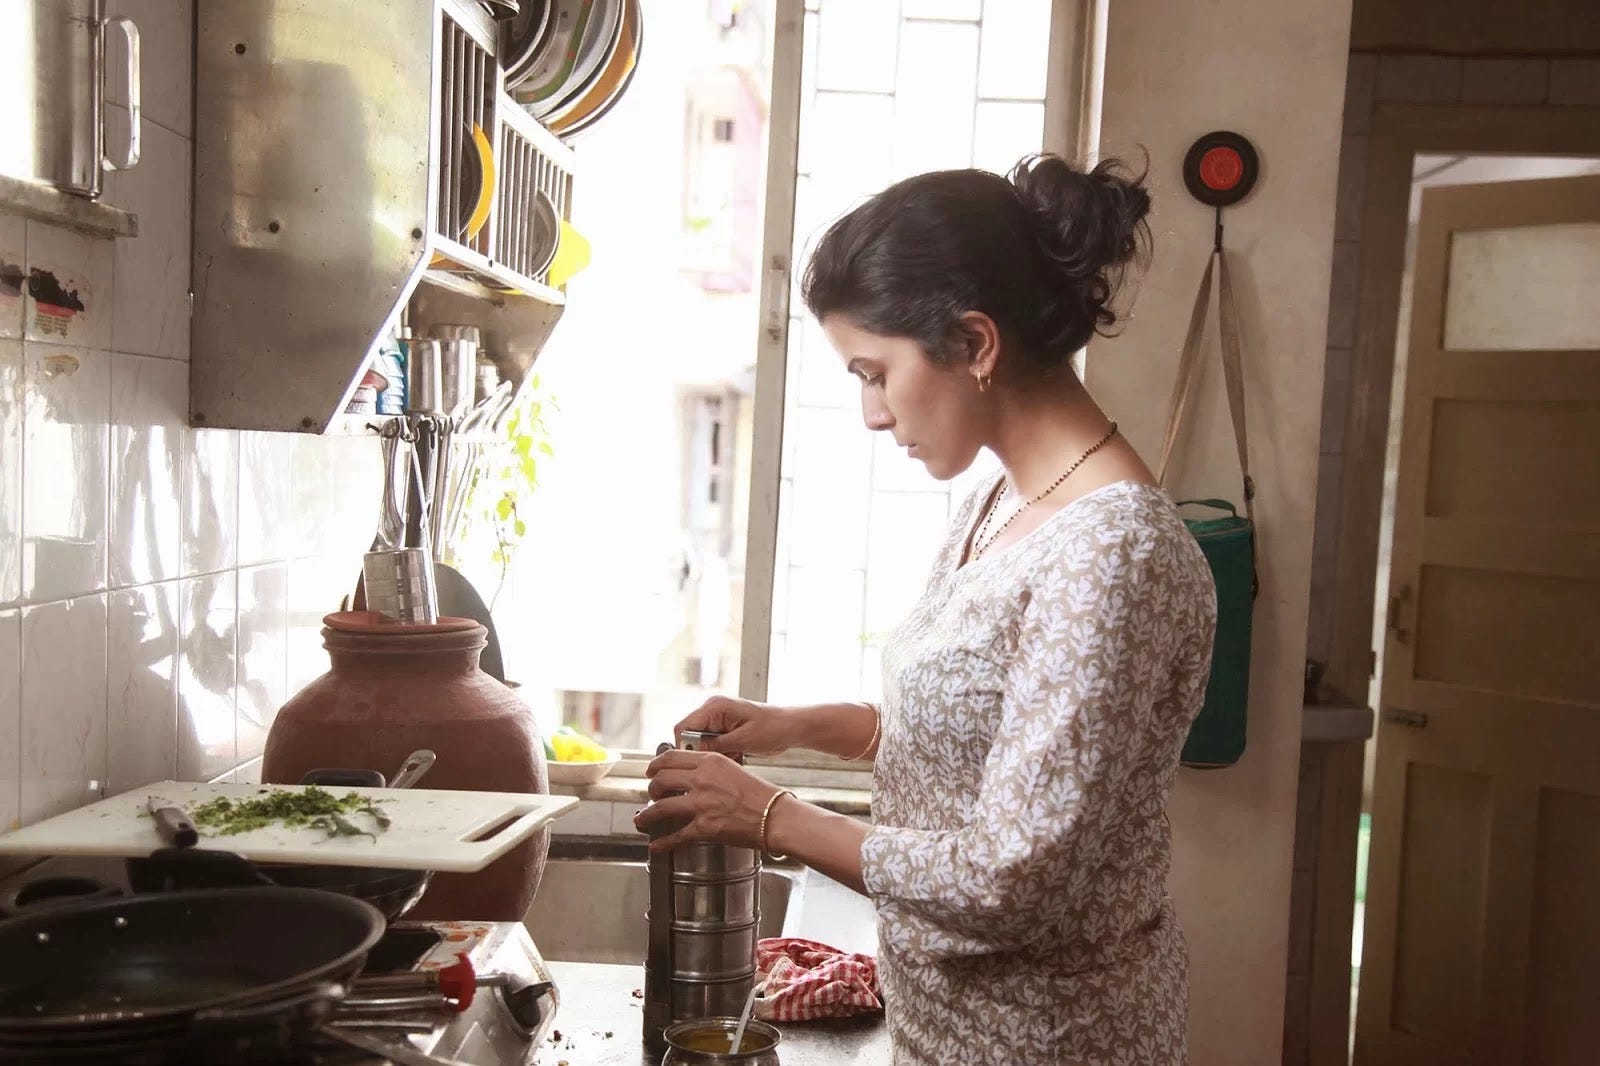 Top 6 crises faced by Indian housewives by Sharanya Munsi Medium image